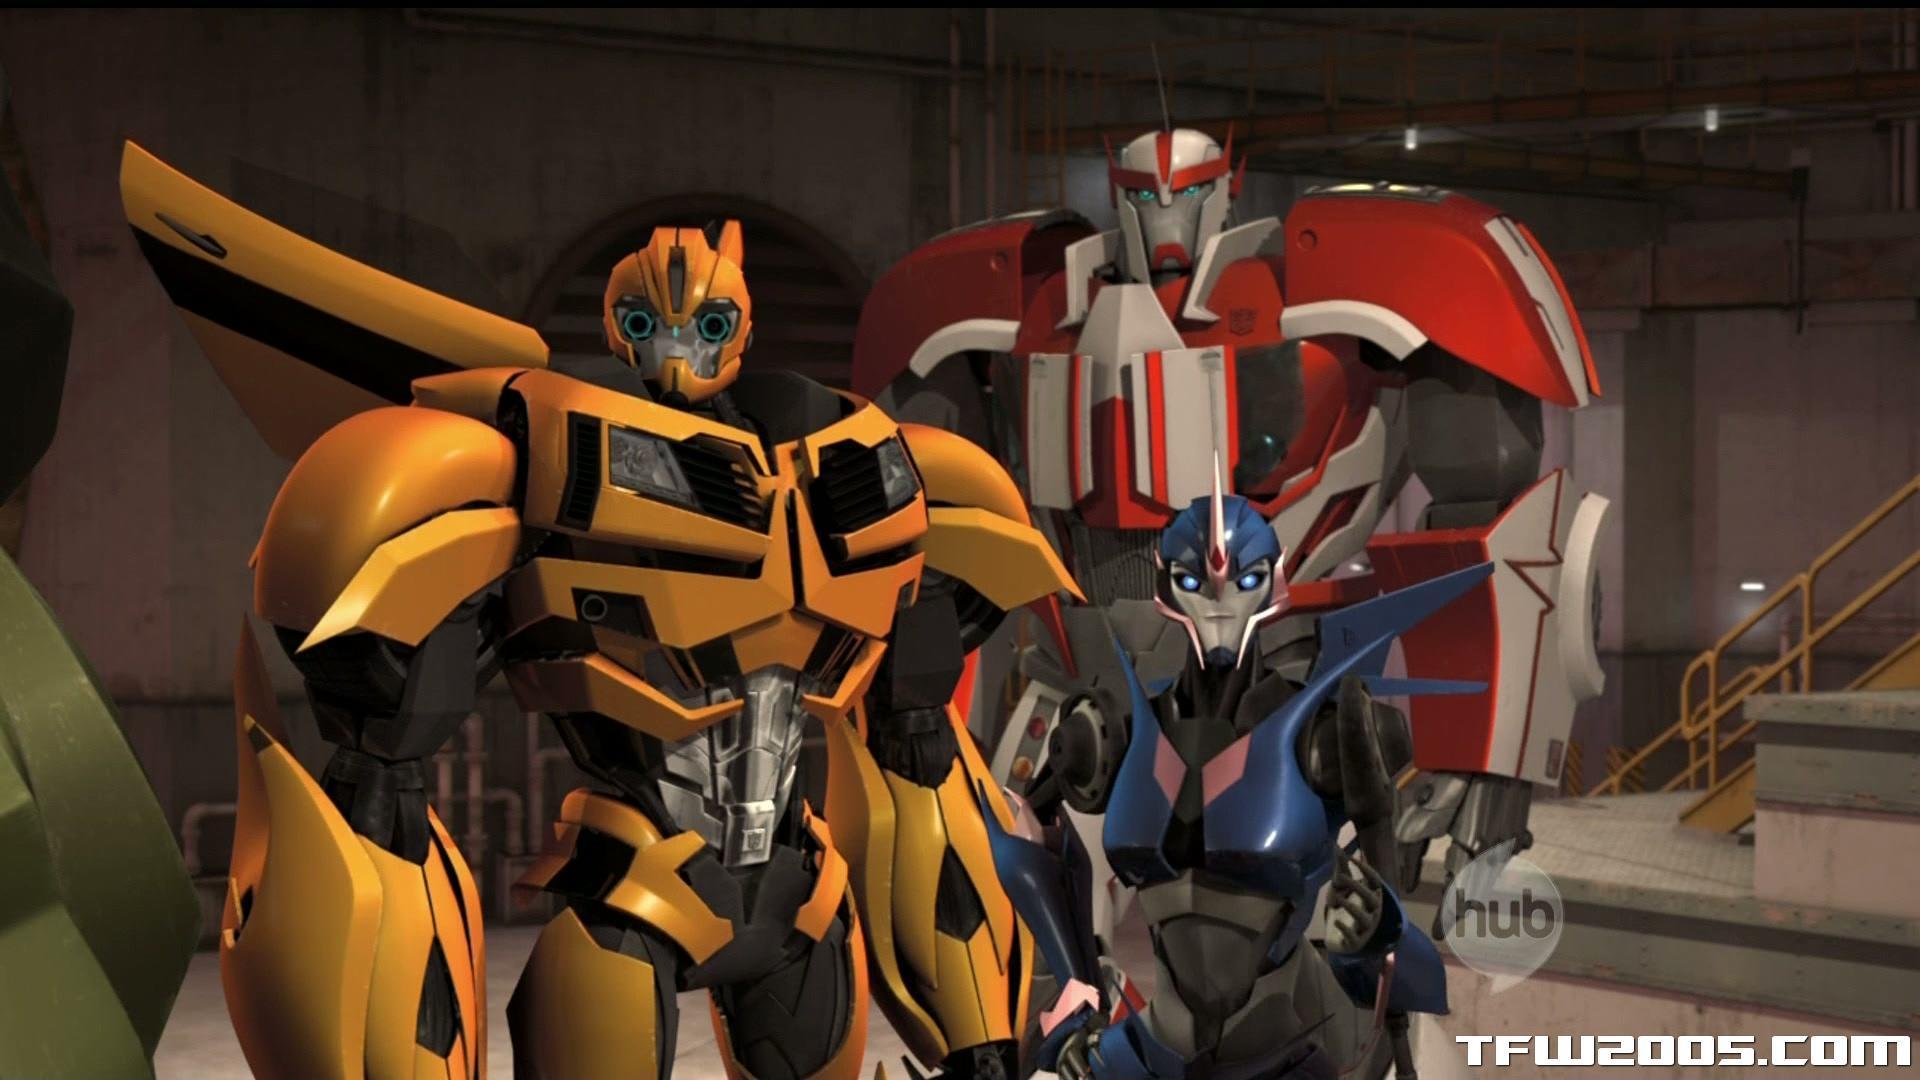 Transformers Trilogie TRUEFRENCH HD 720p